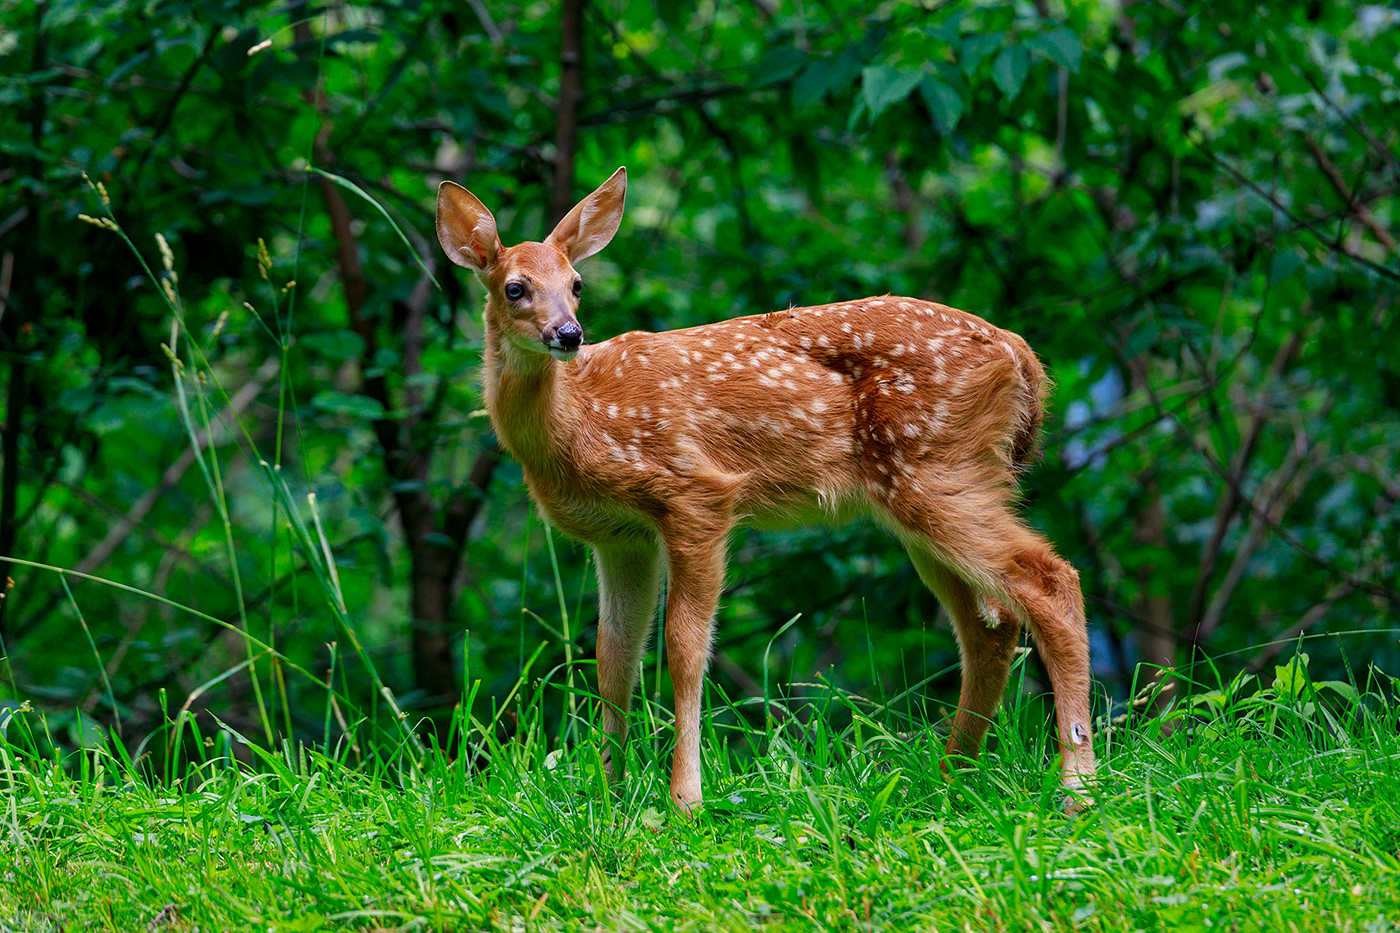 bashful Big Ears cute deer fawn pretty white spots Pennsylvania Pittsburgh schenley park